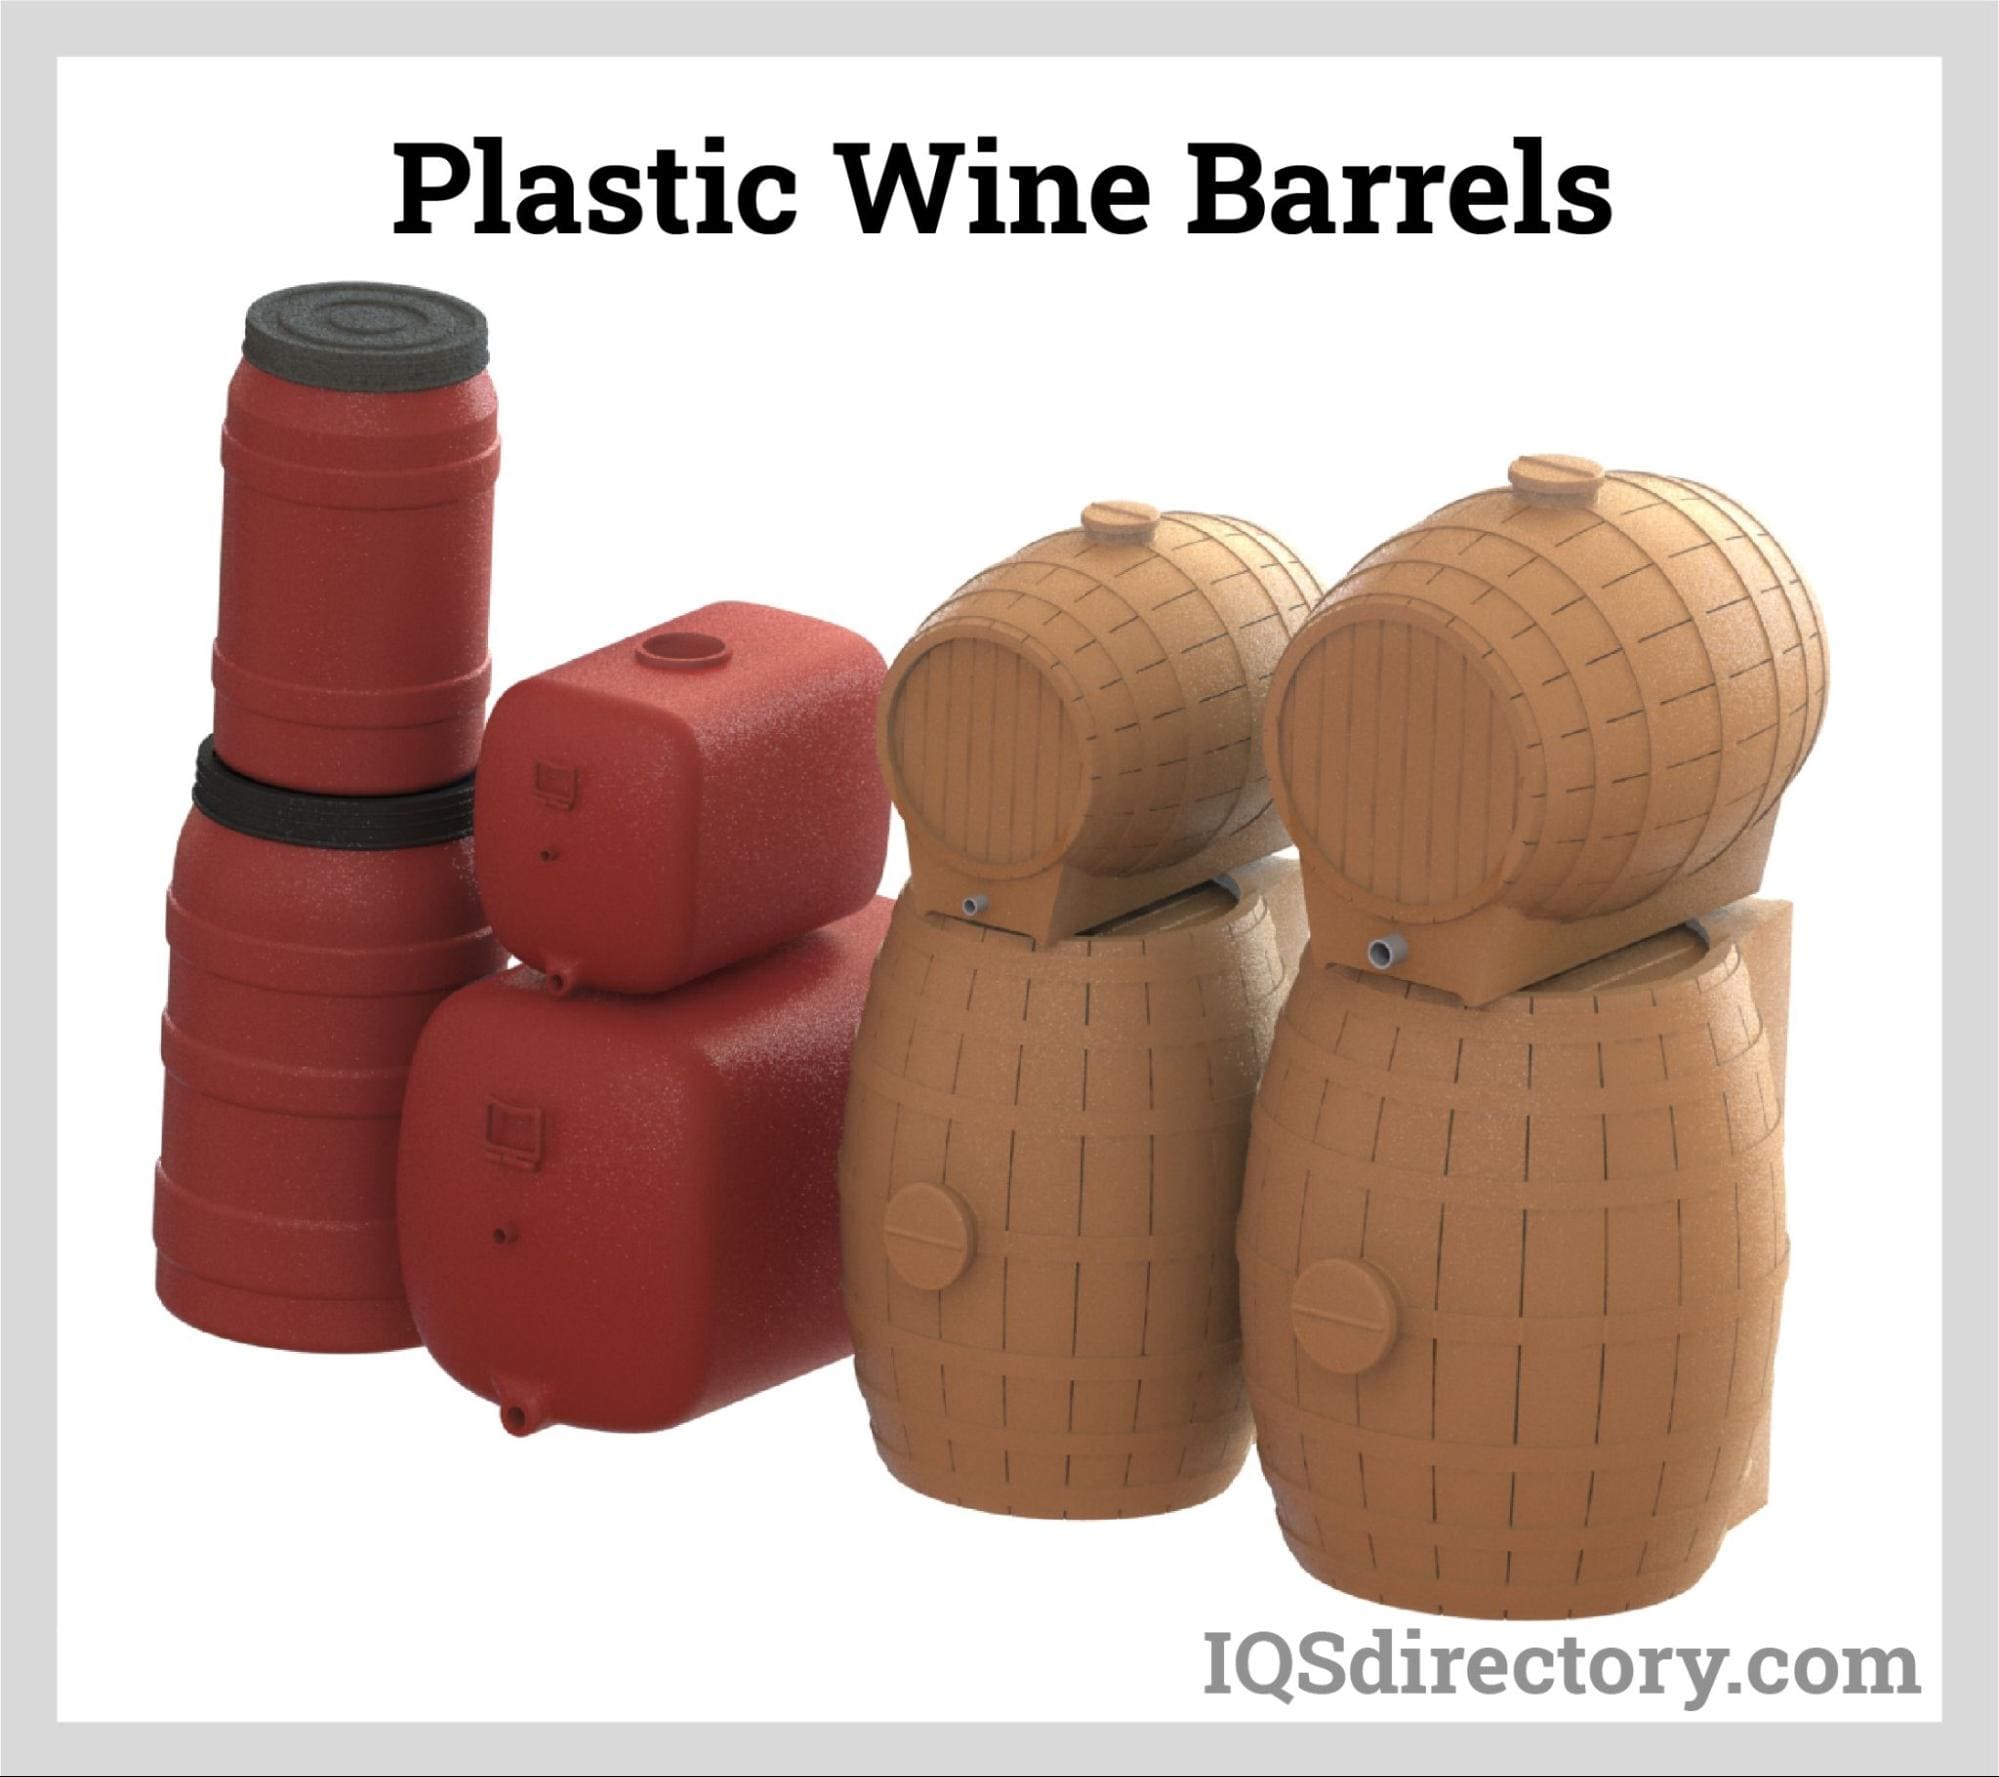 Plastic Wine Barrels